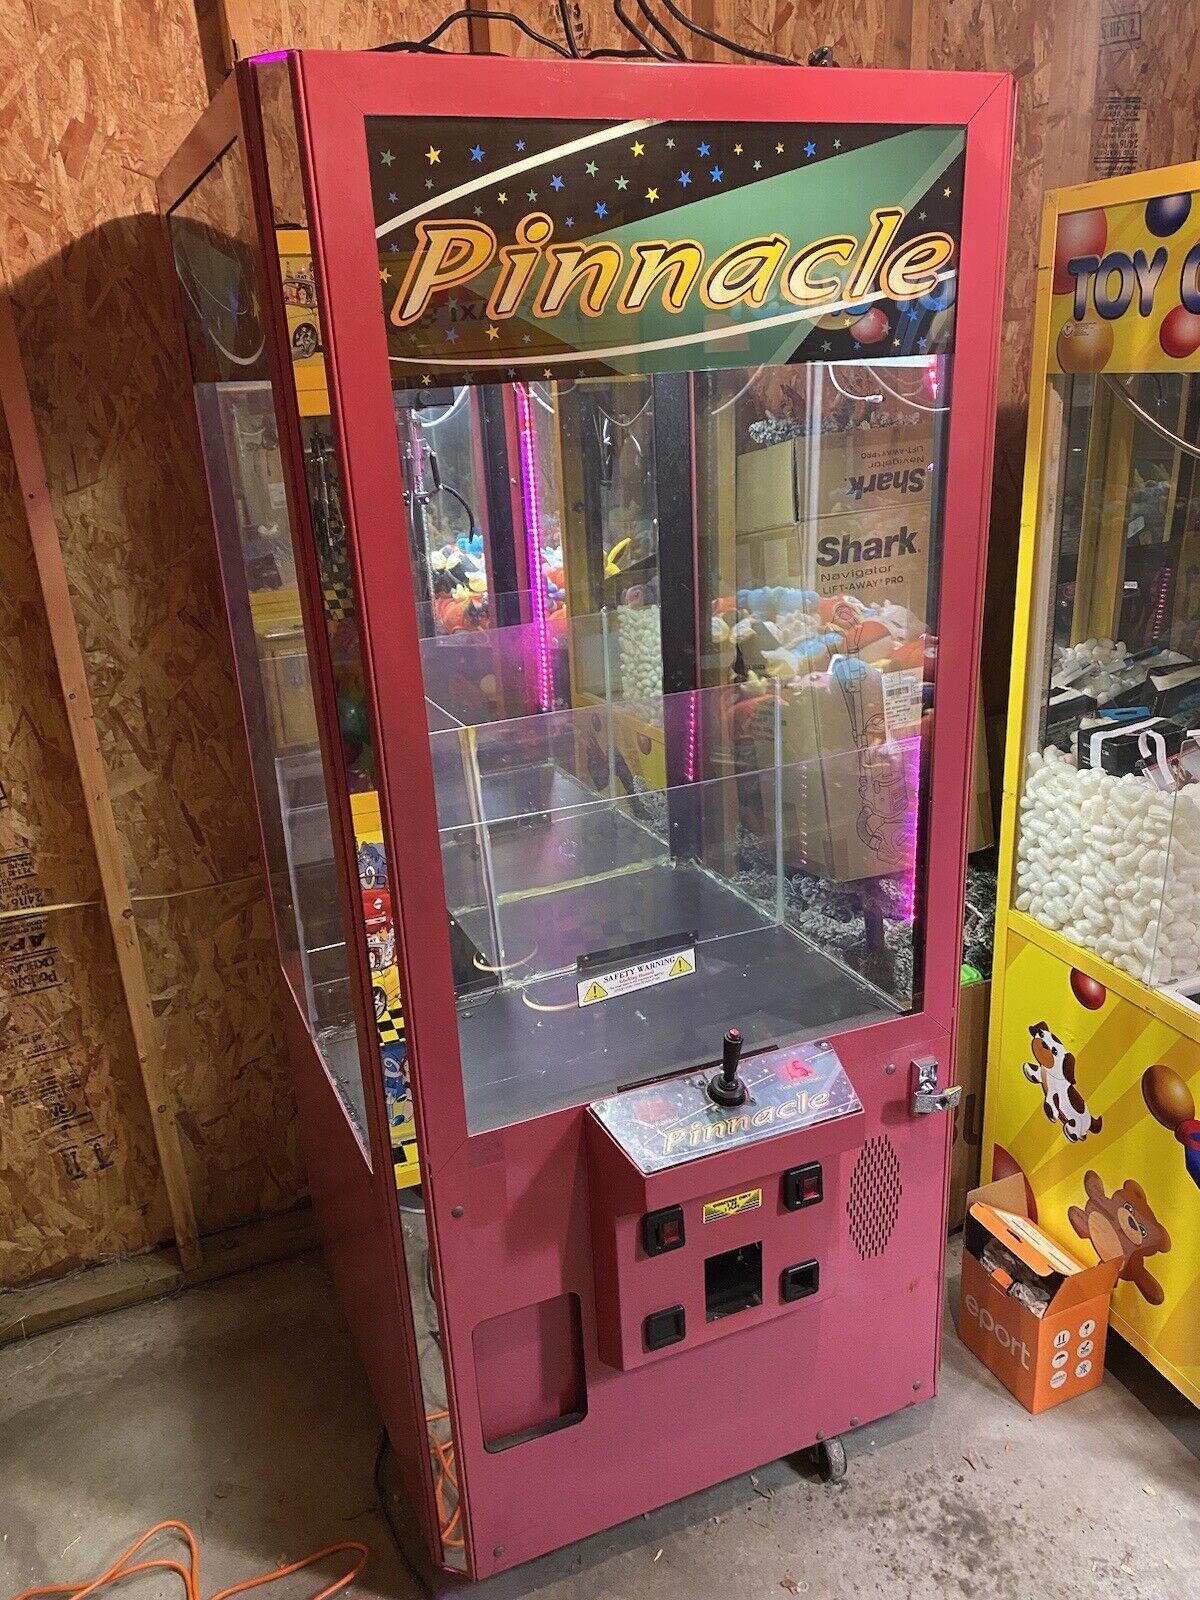 Pinnacle Claw Machine Arcade Plush Redemption Crane Game